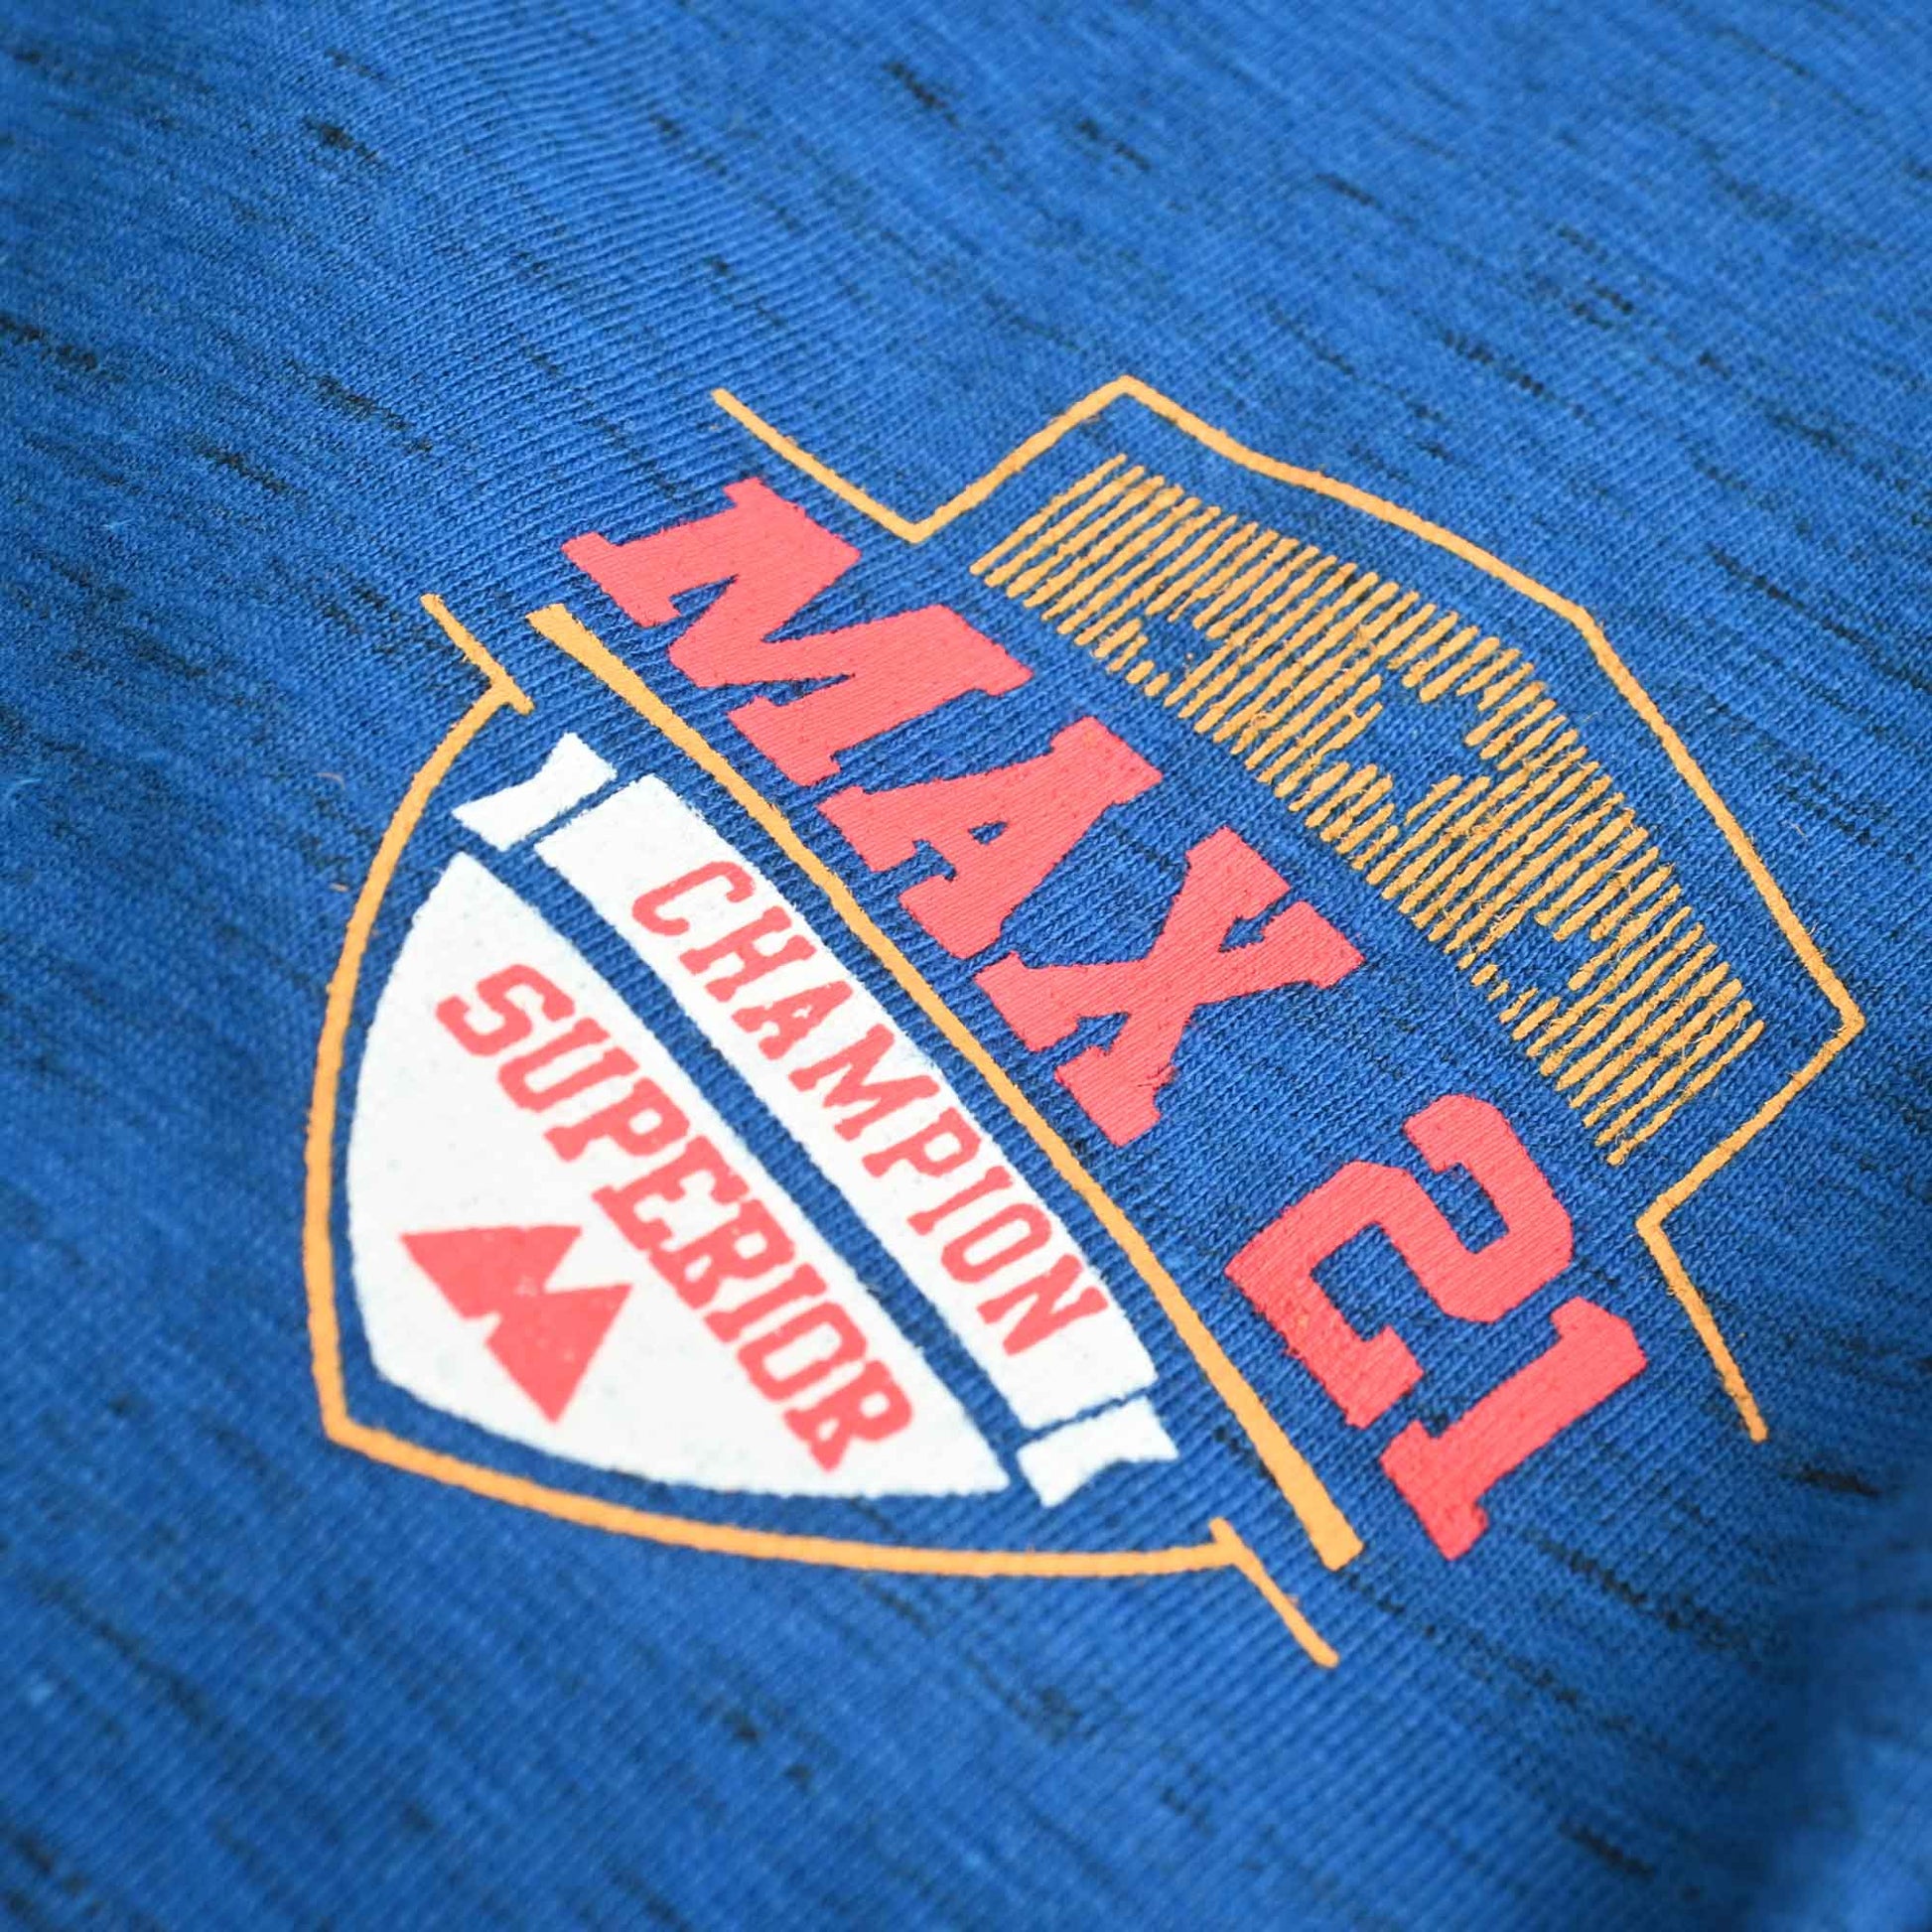 Max 21 Men's Champion Superior Printed Shorts Men's Shorts SZK 